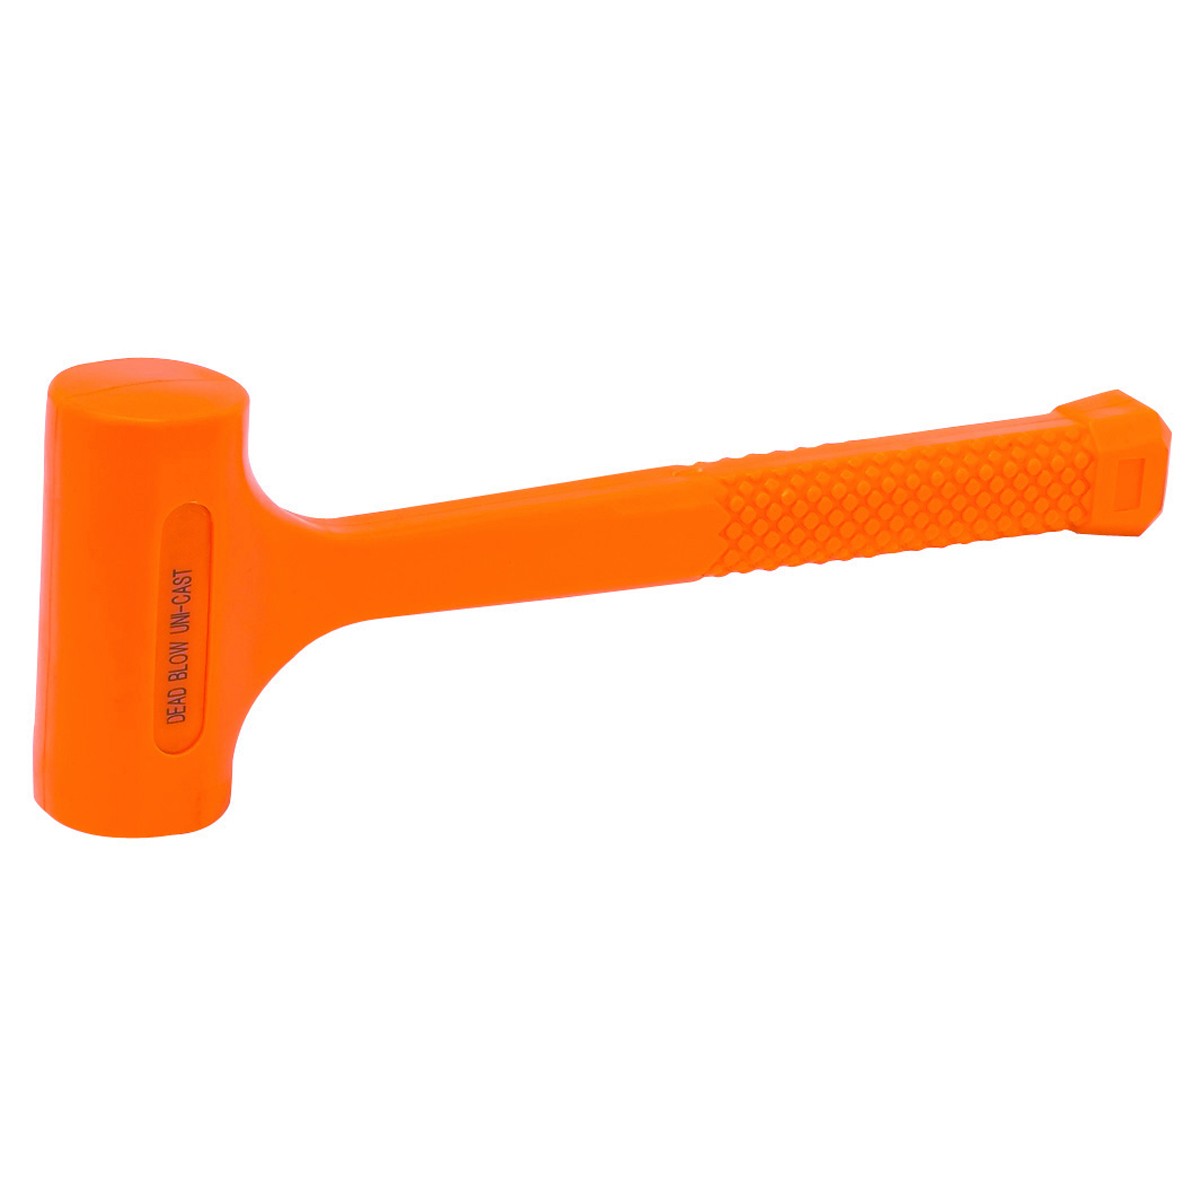 New   Pittsburgh  3 lb. Neon Orange Dead Blow Hammer